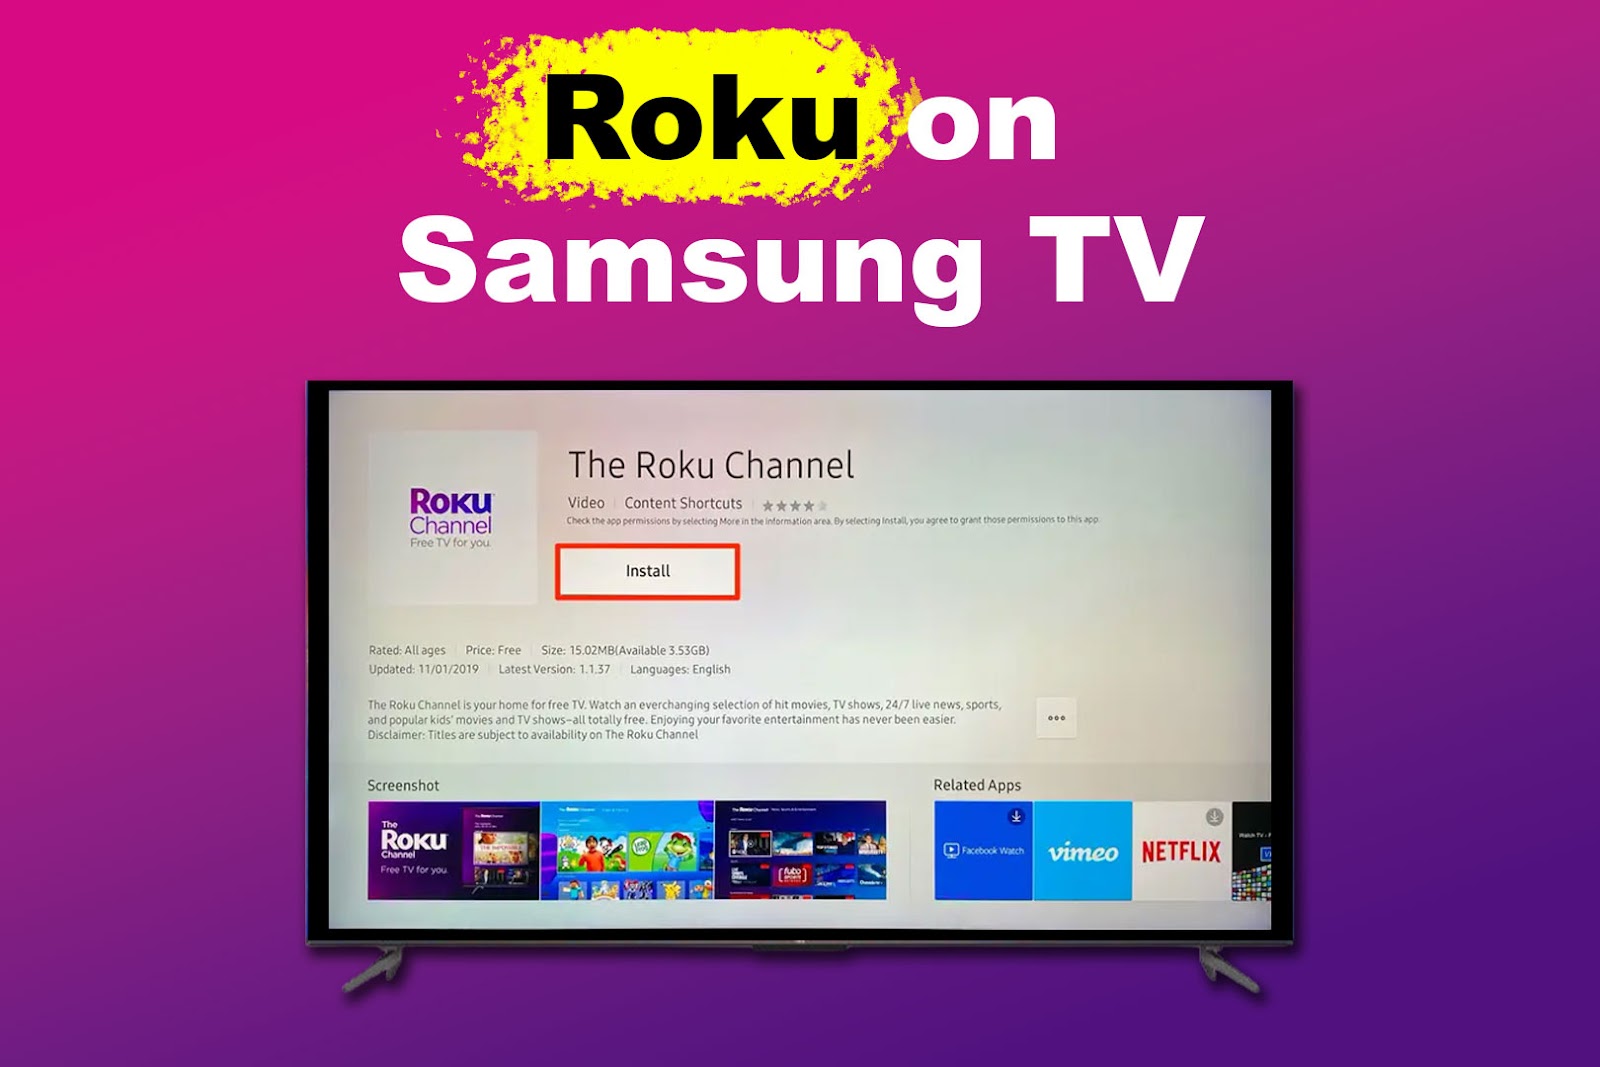 How to Get Roku TV on Samsung